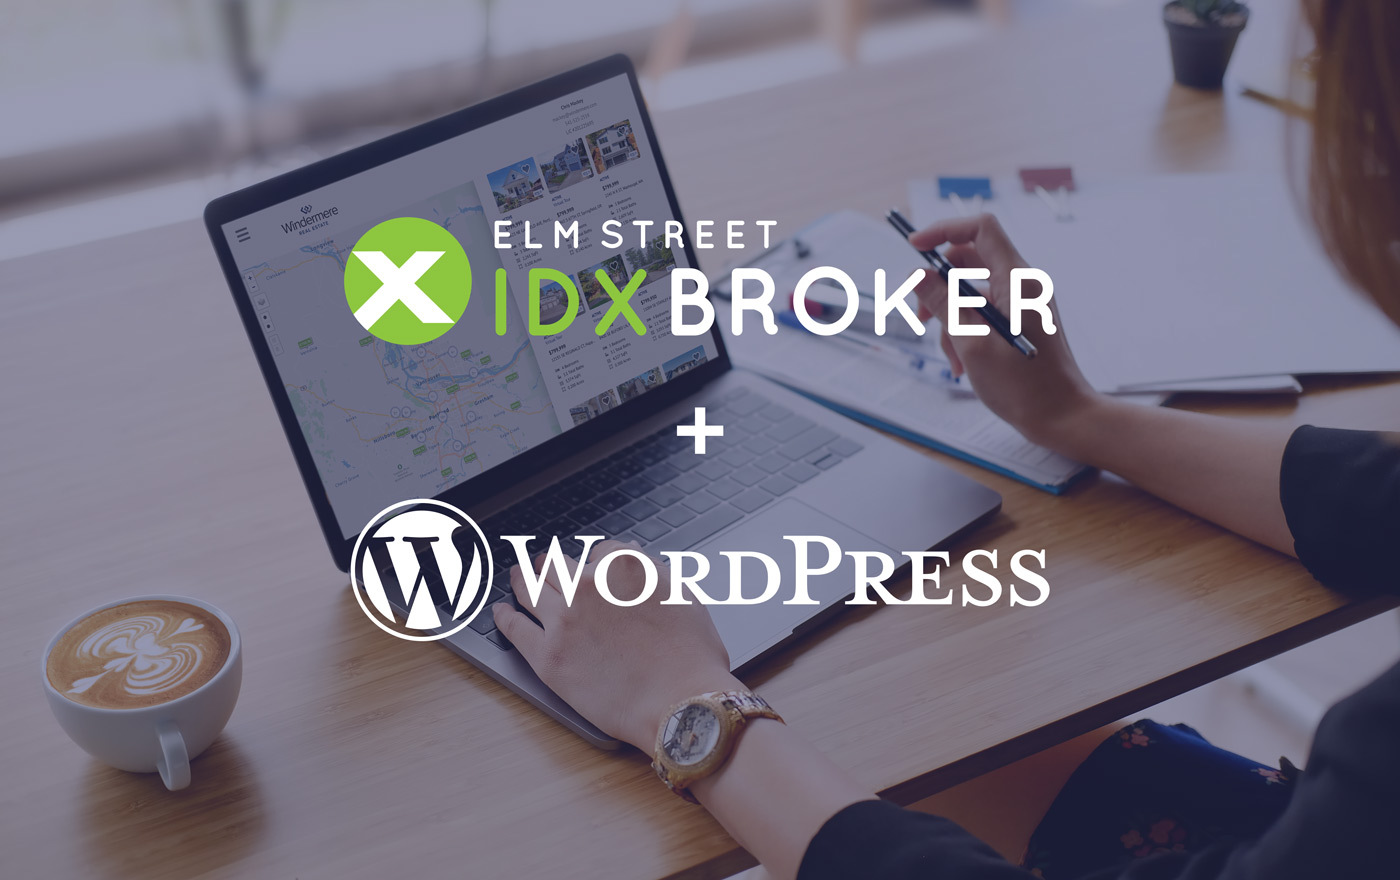 lDX Broker for Wordpress Image